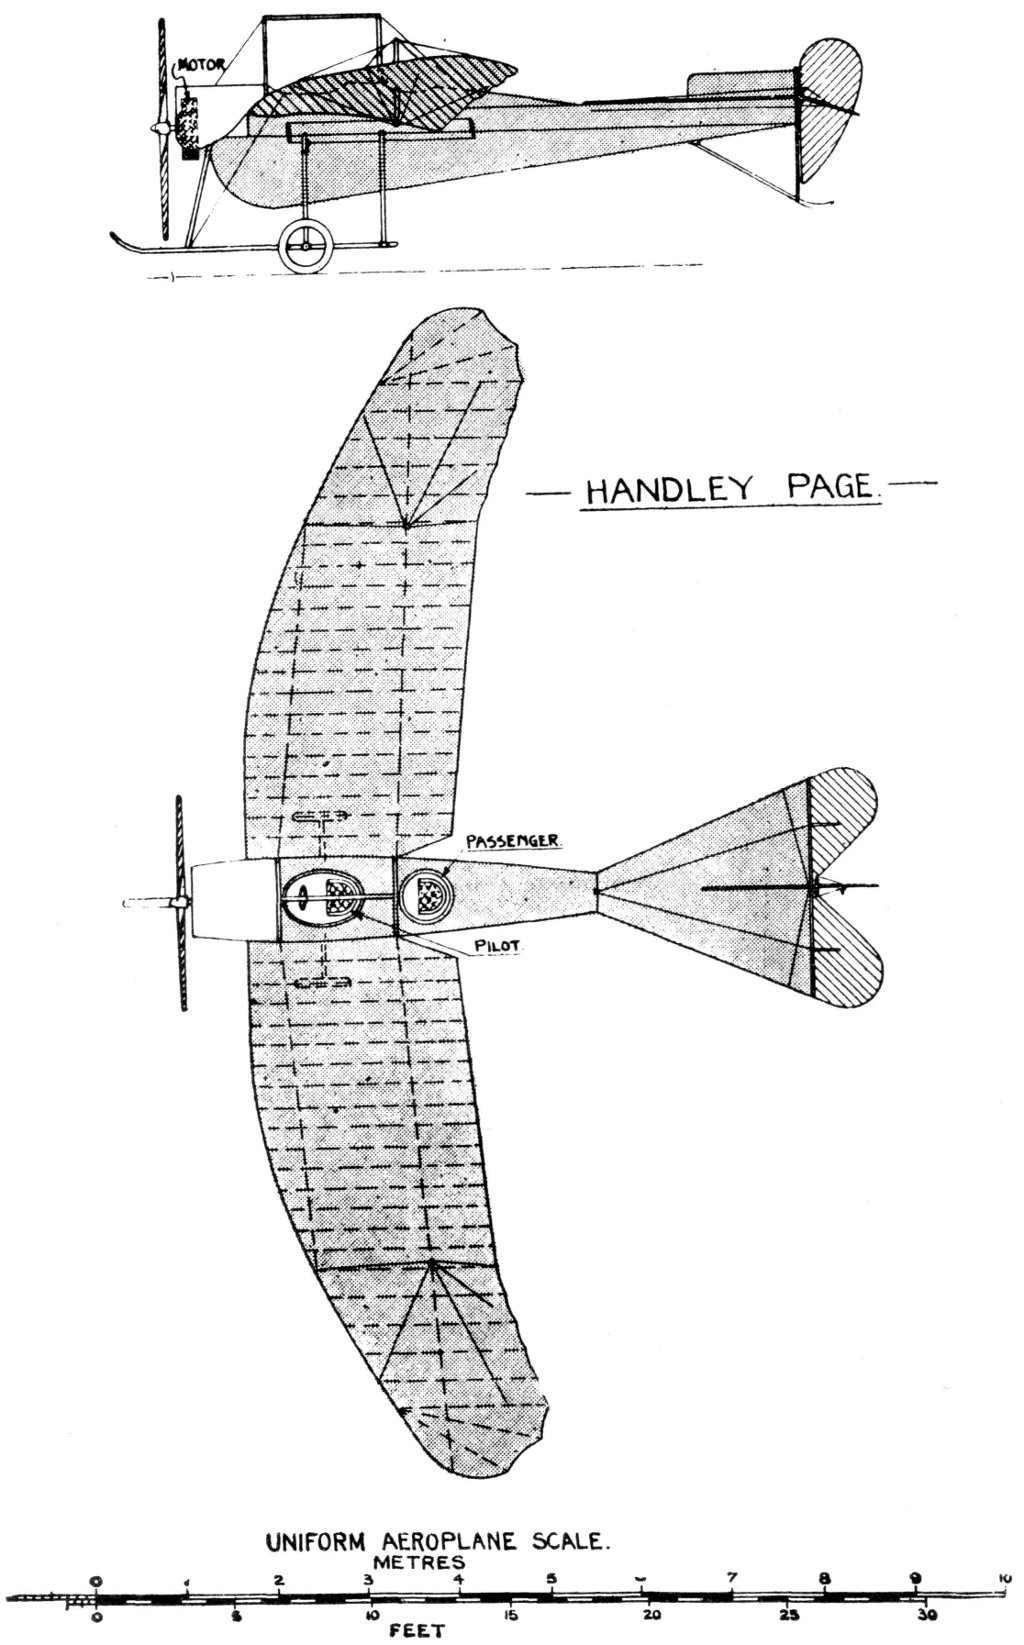 HANDLEY PAGE. Uniform Aeroplane Scale